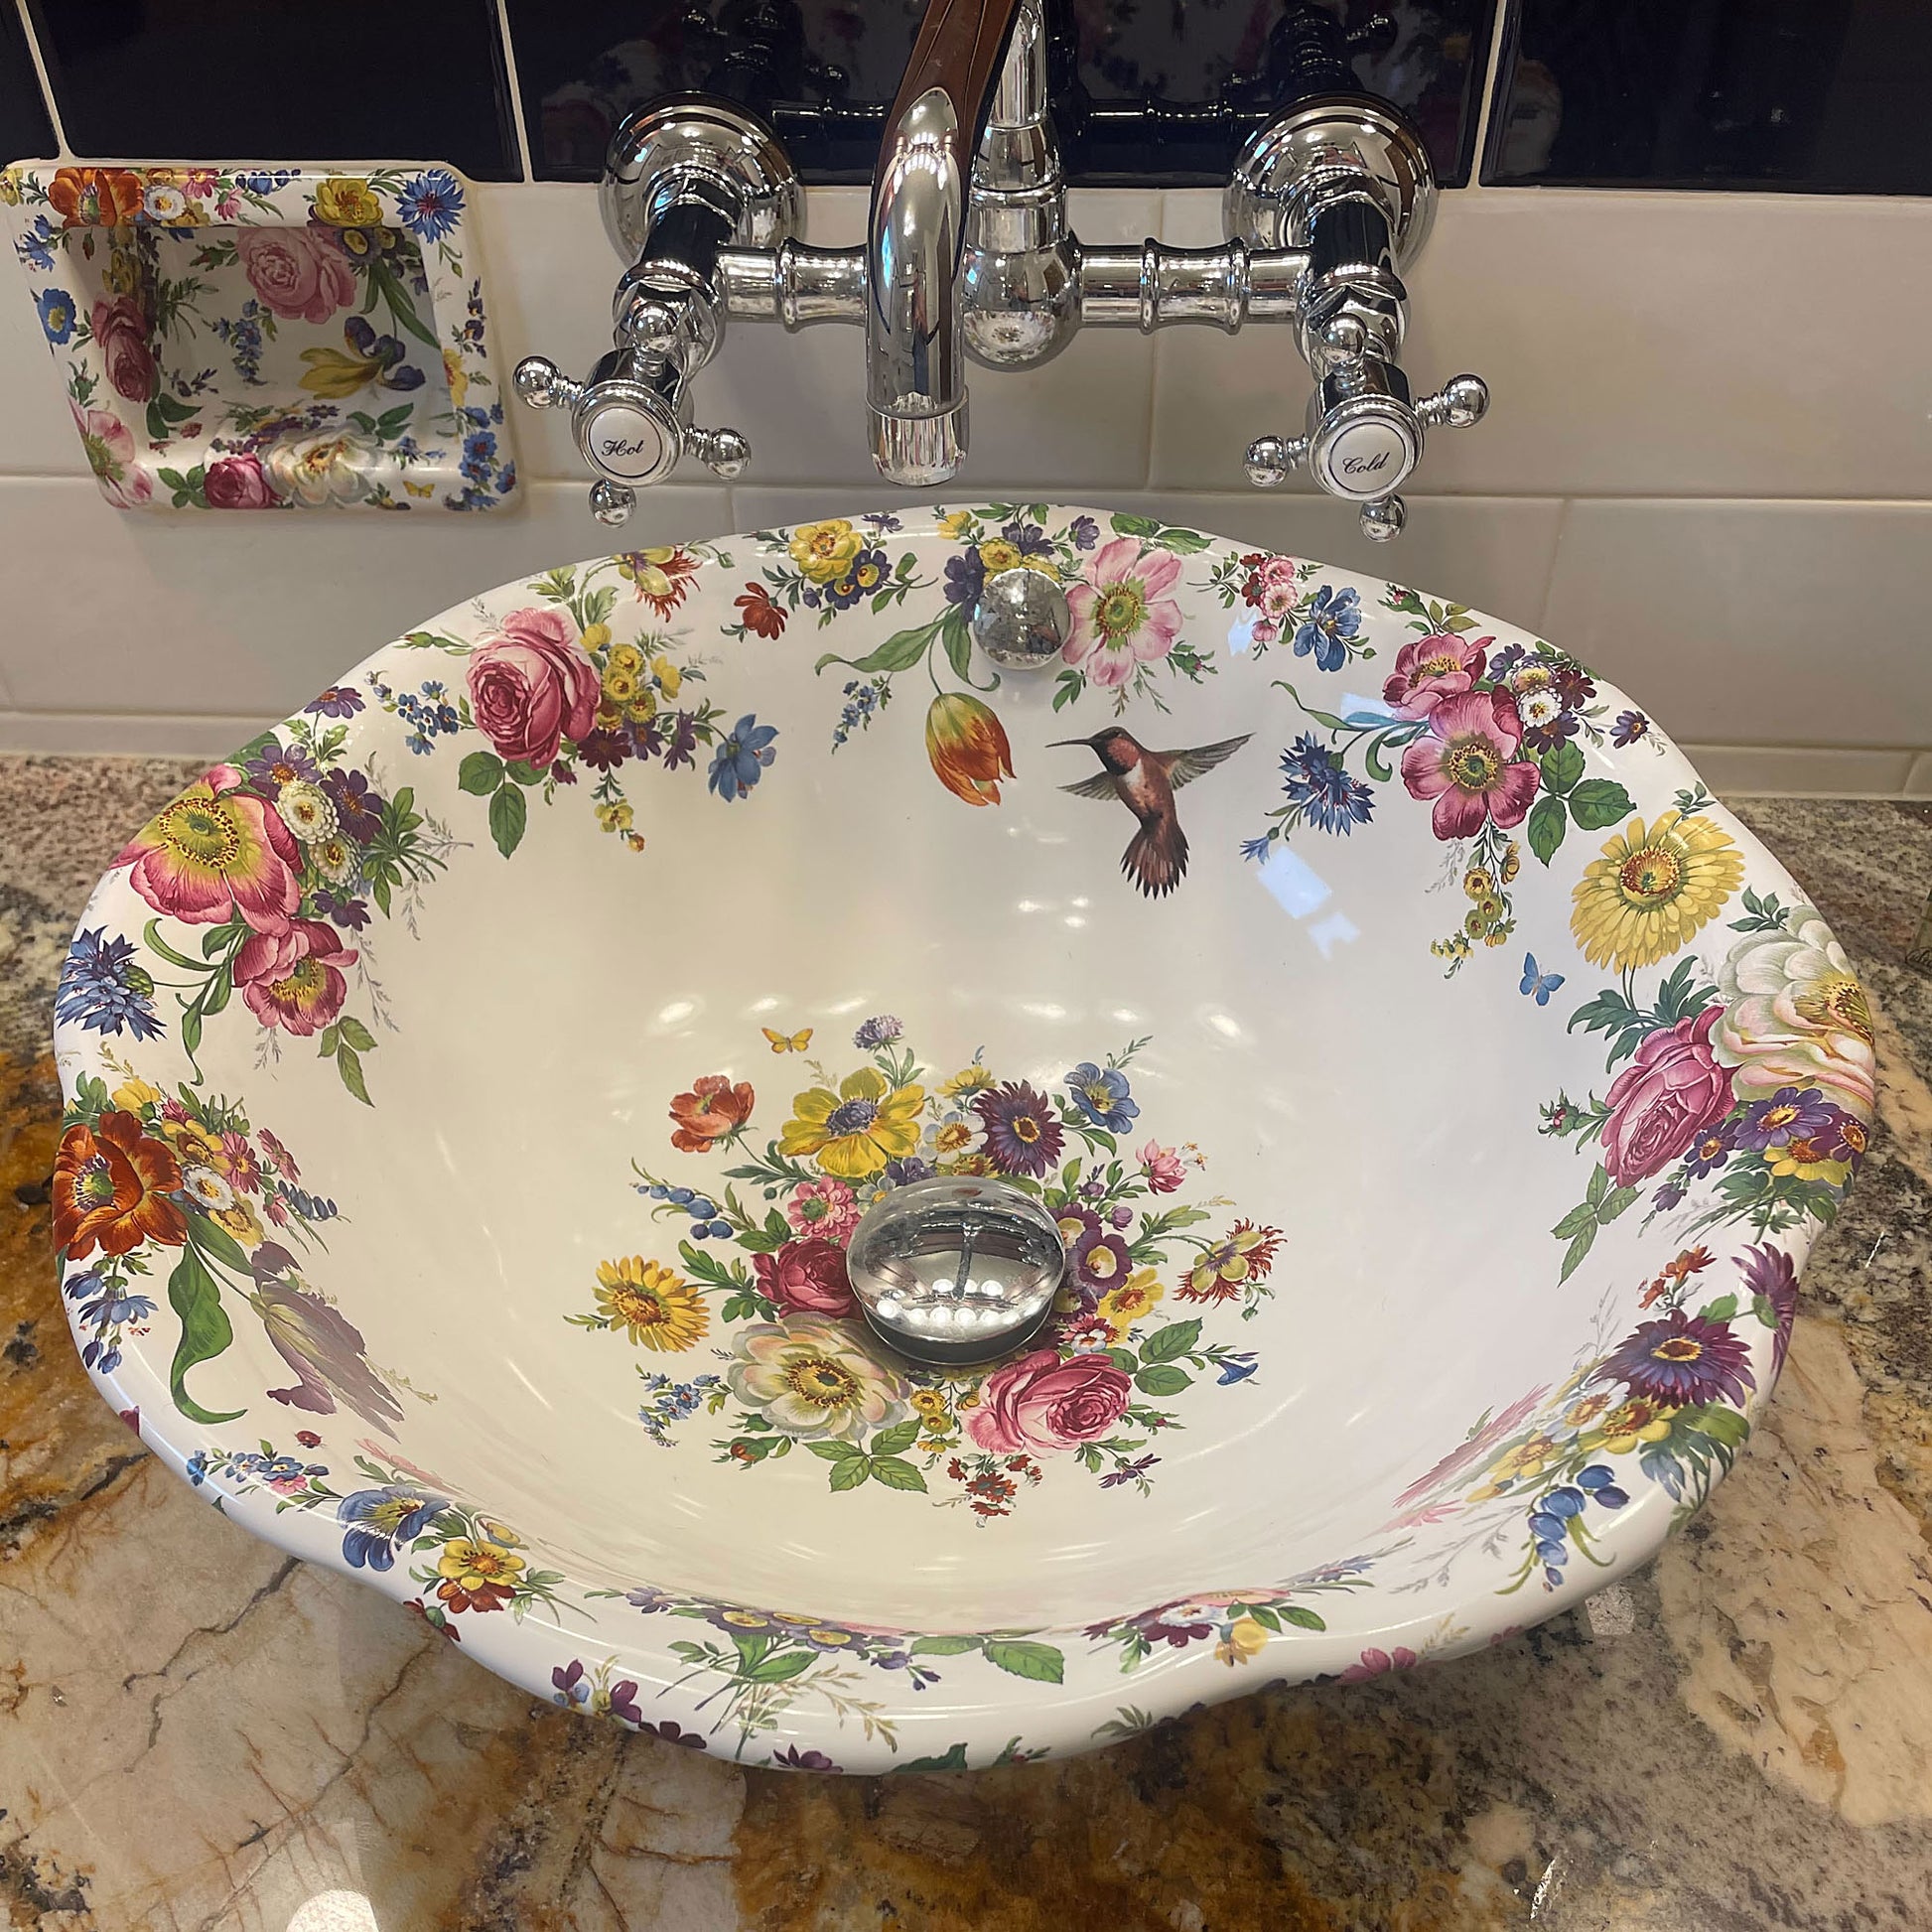 Bathroom featuring Flower vessel sink with hummingbirds